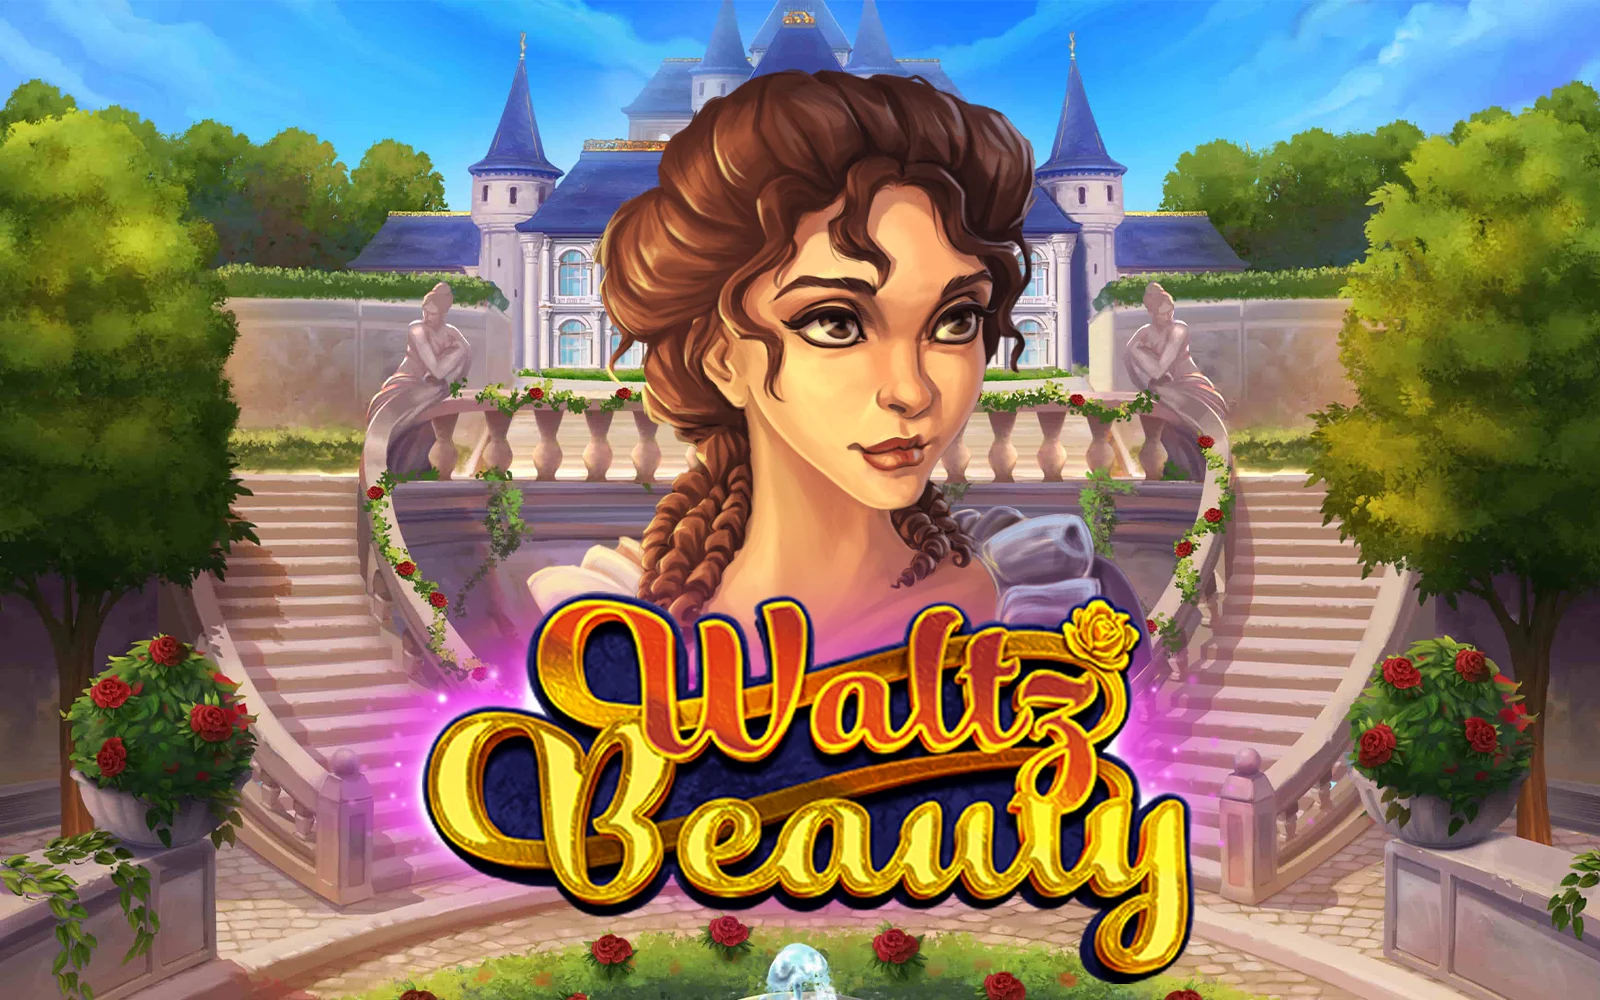 Joacă Waltz Beauty în cazinoul online Starcasino.be